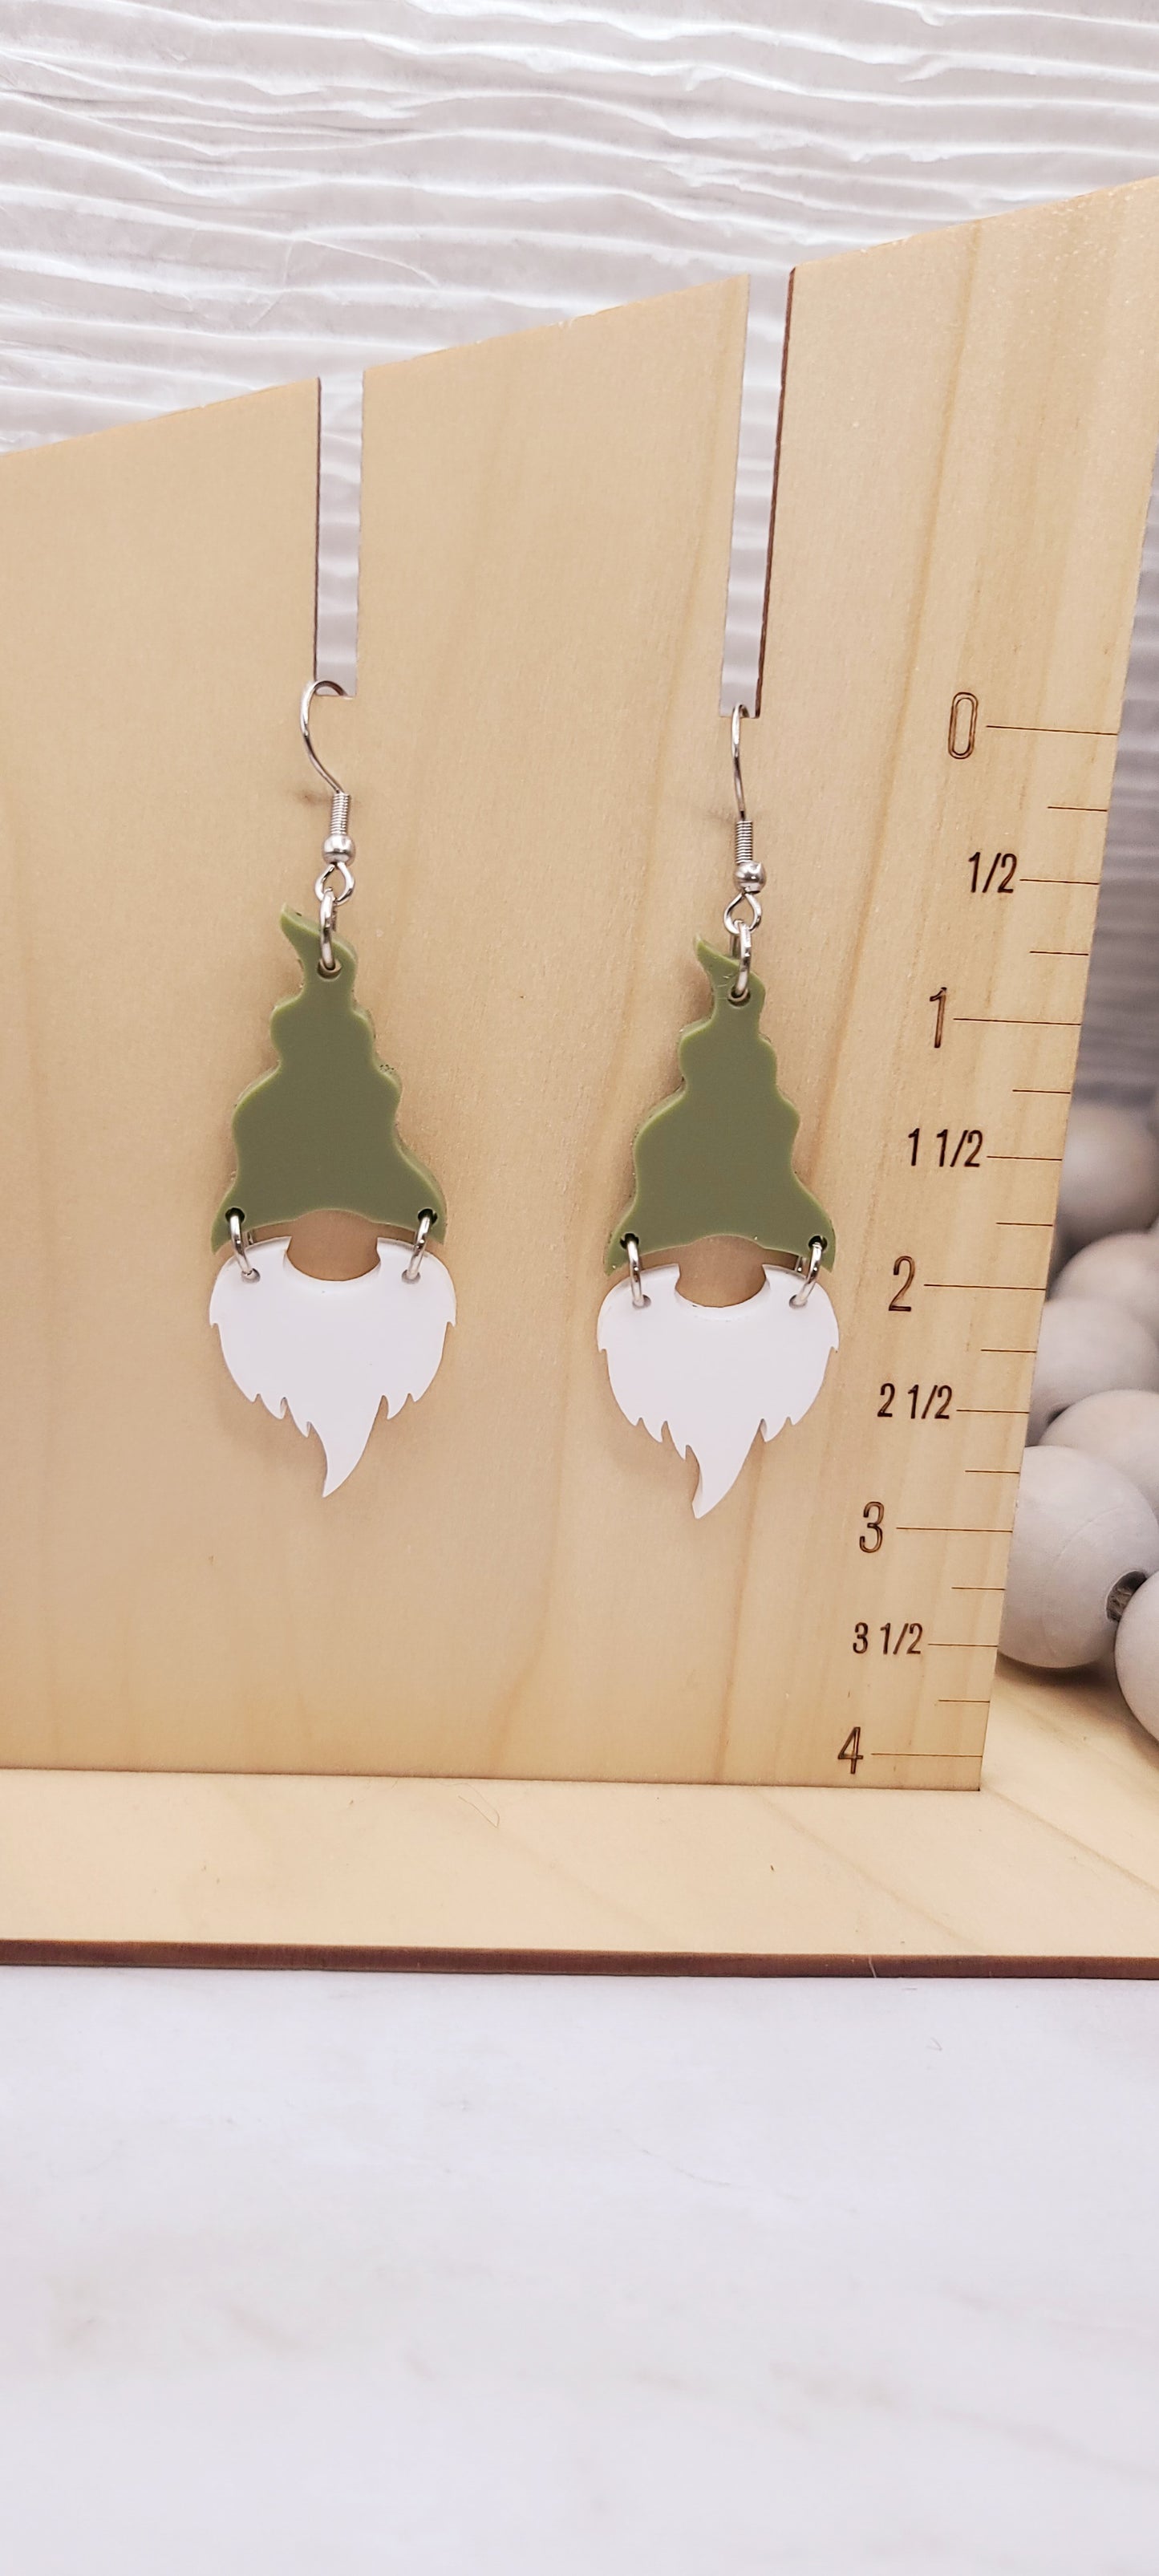 Green Gnome Earrings